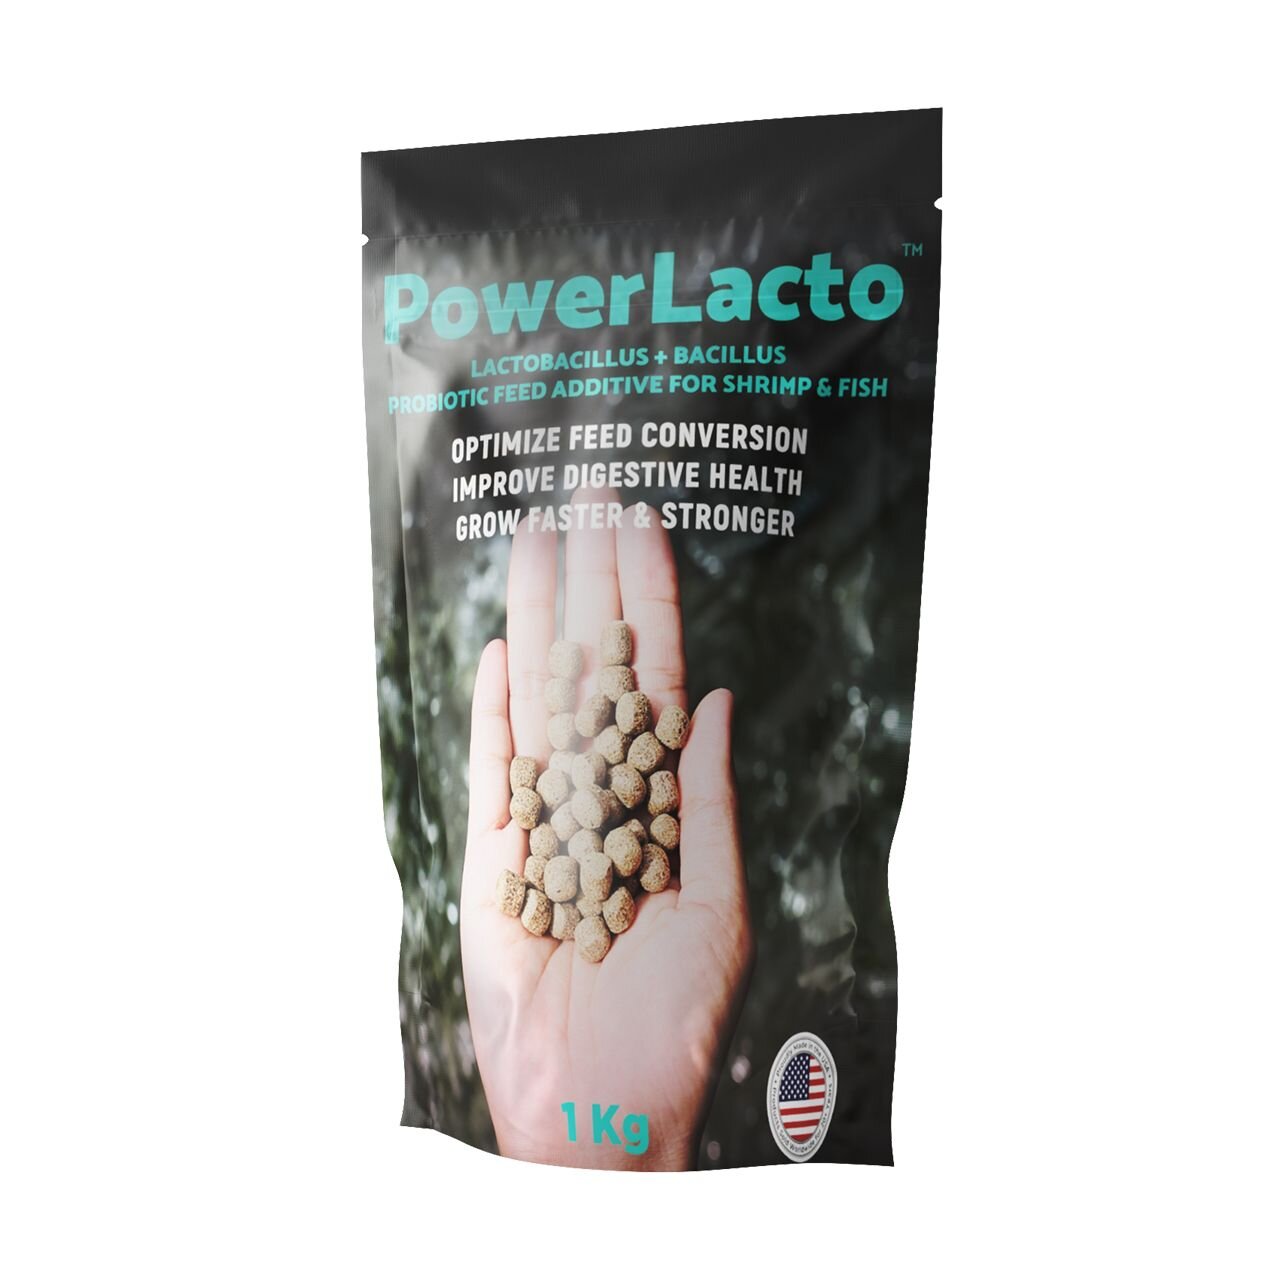 PowerLacto™ - Lactobacillus + Bacillus probiotic feed additive for shrimp &amp; fish